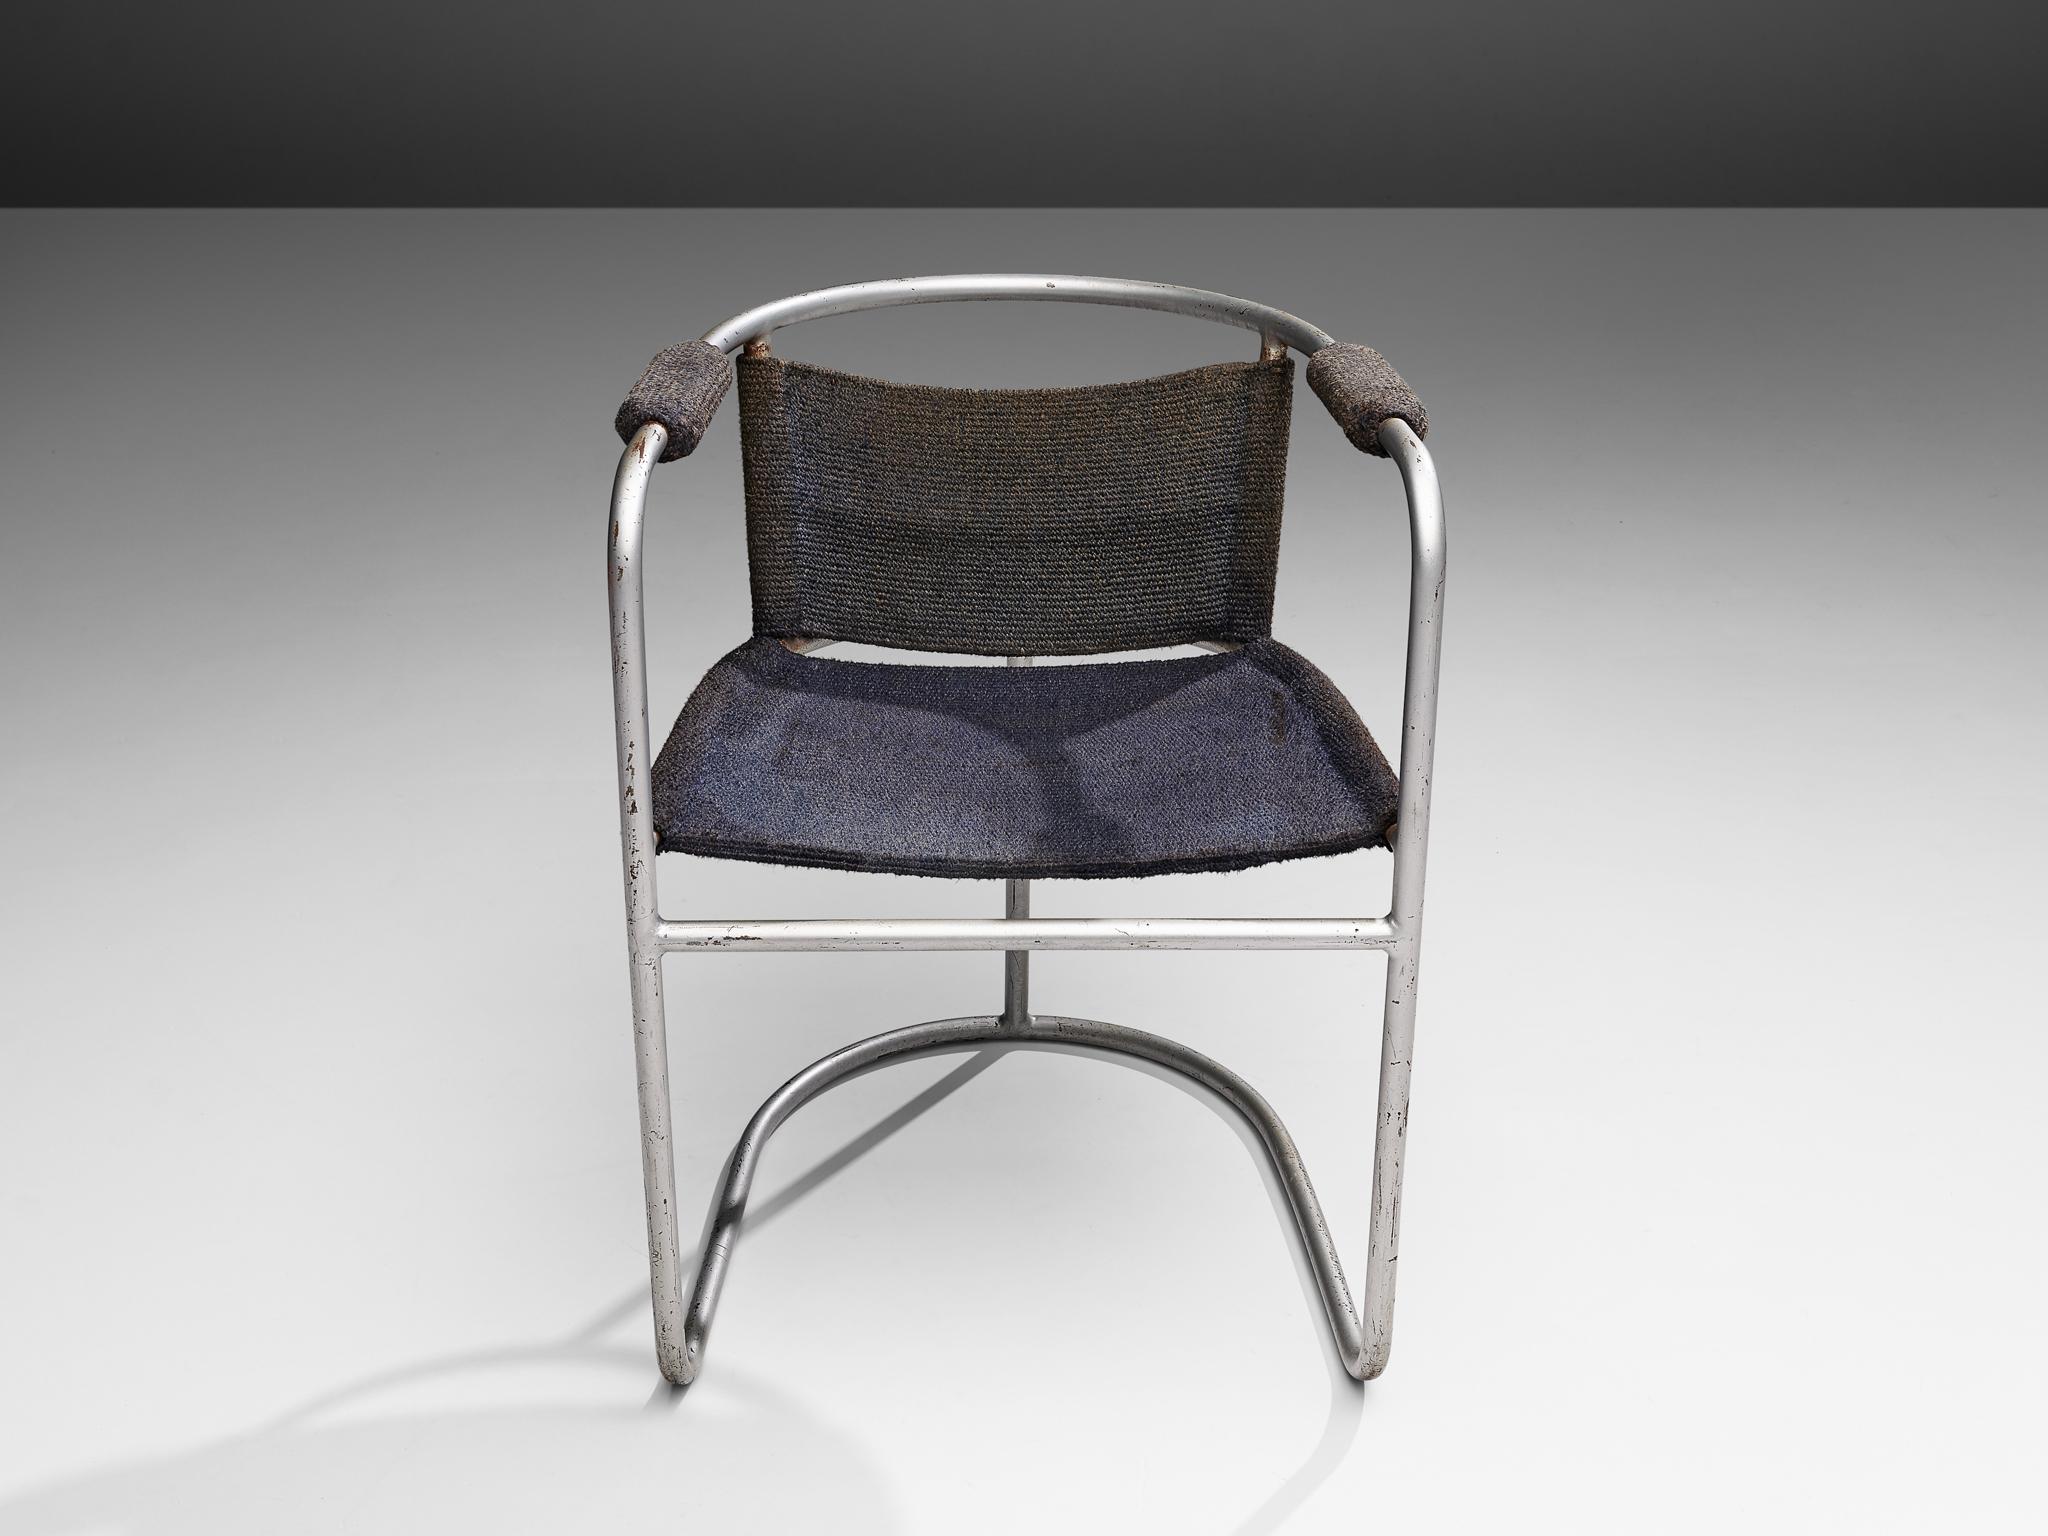 Chrome Bas Van Pelt Early Tubular Steel Chair with Blue Grey Sisal Seating For Sale